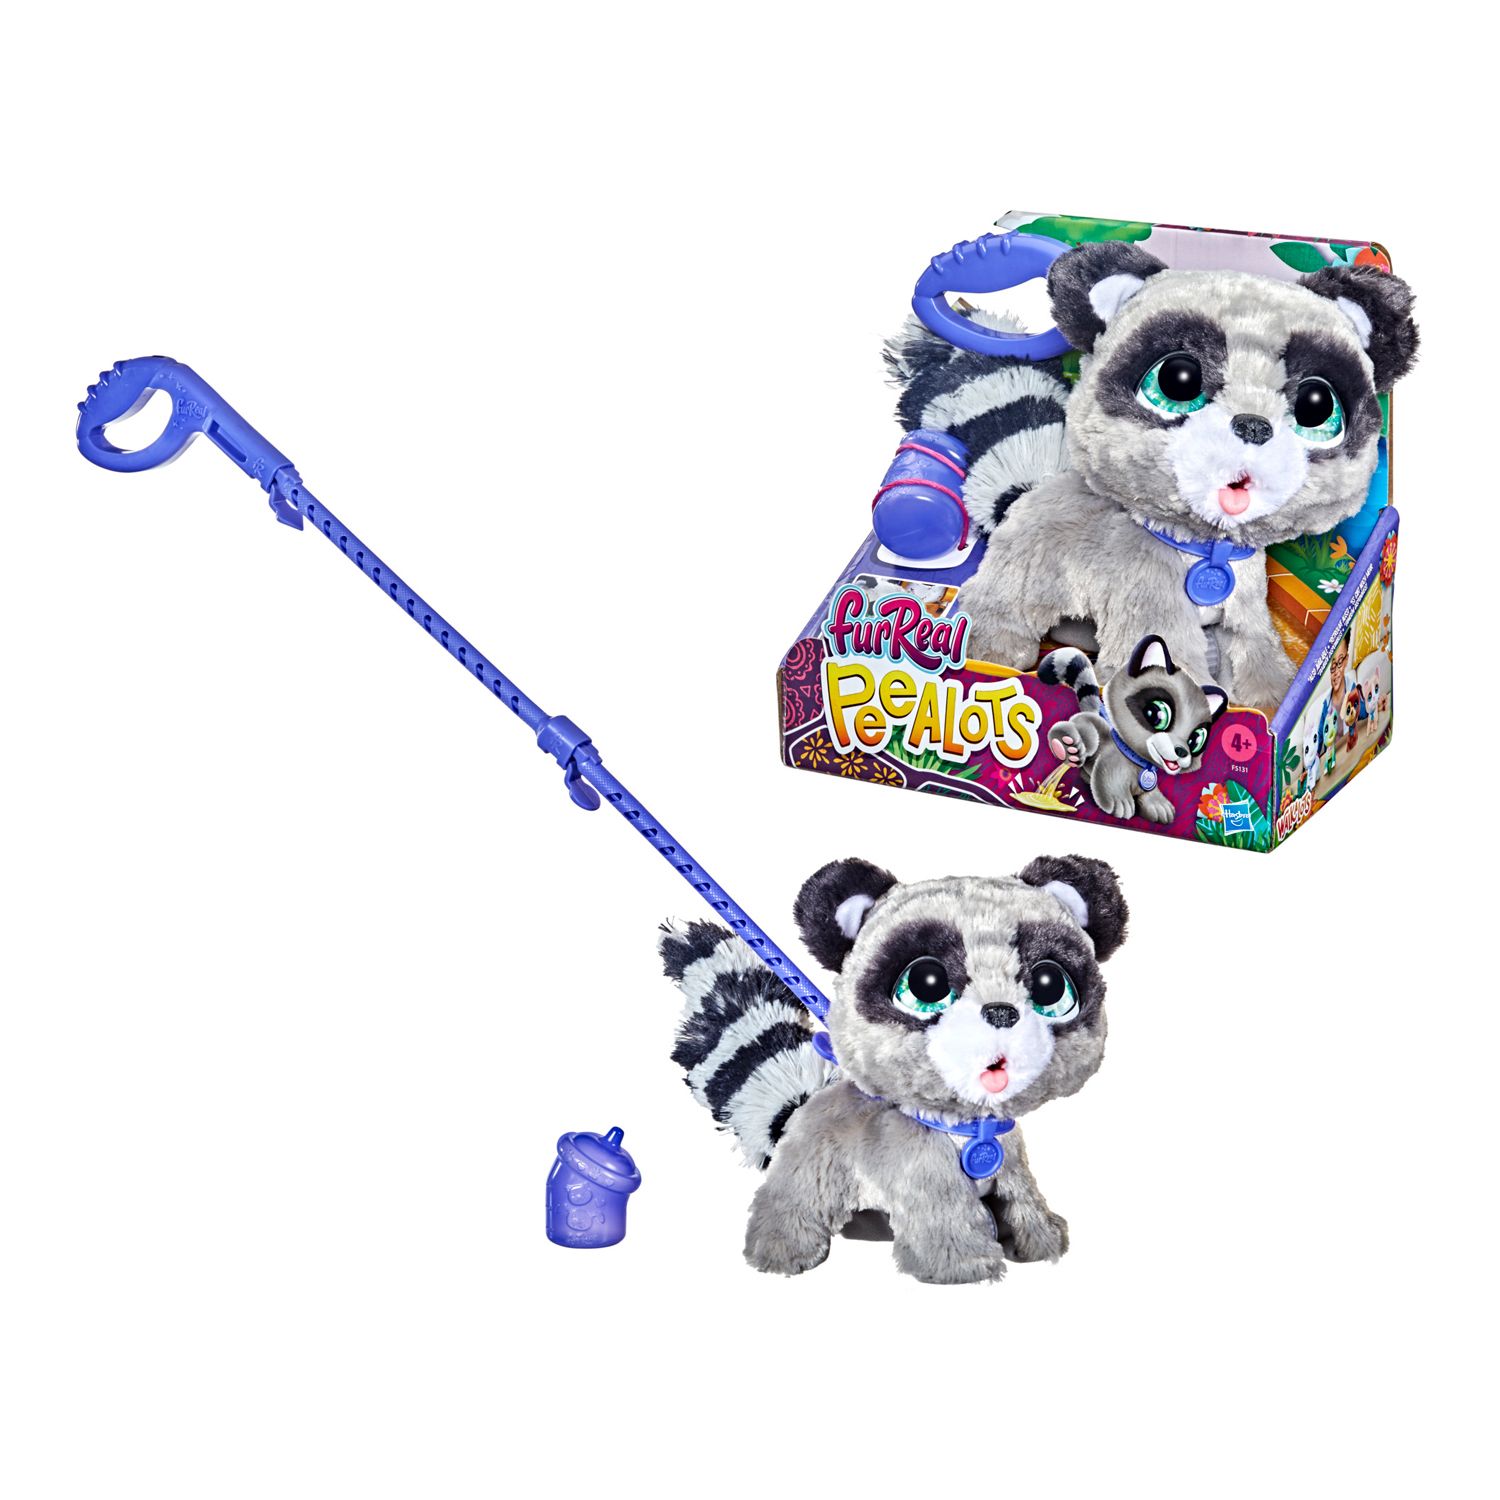 Image for Hasbro furReal Peealots Big Wags Raccoon by at Kohl's.